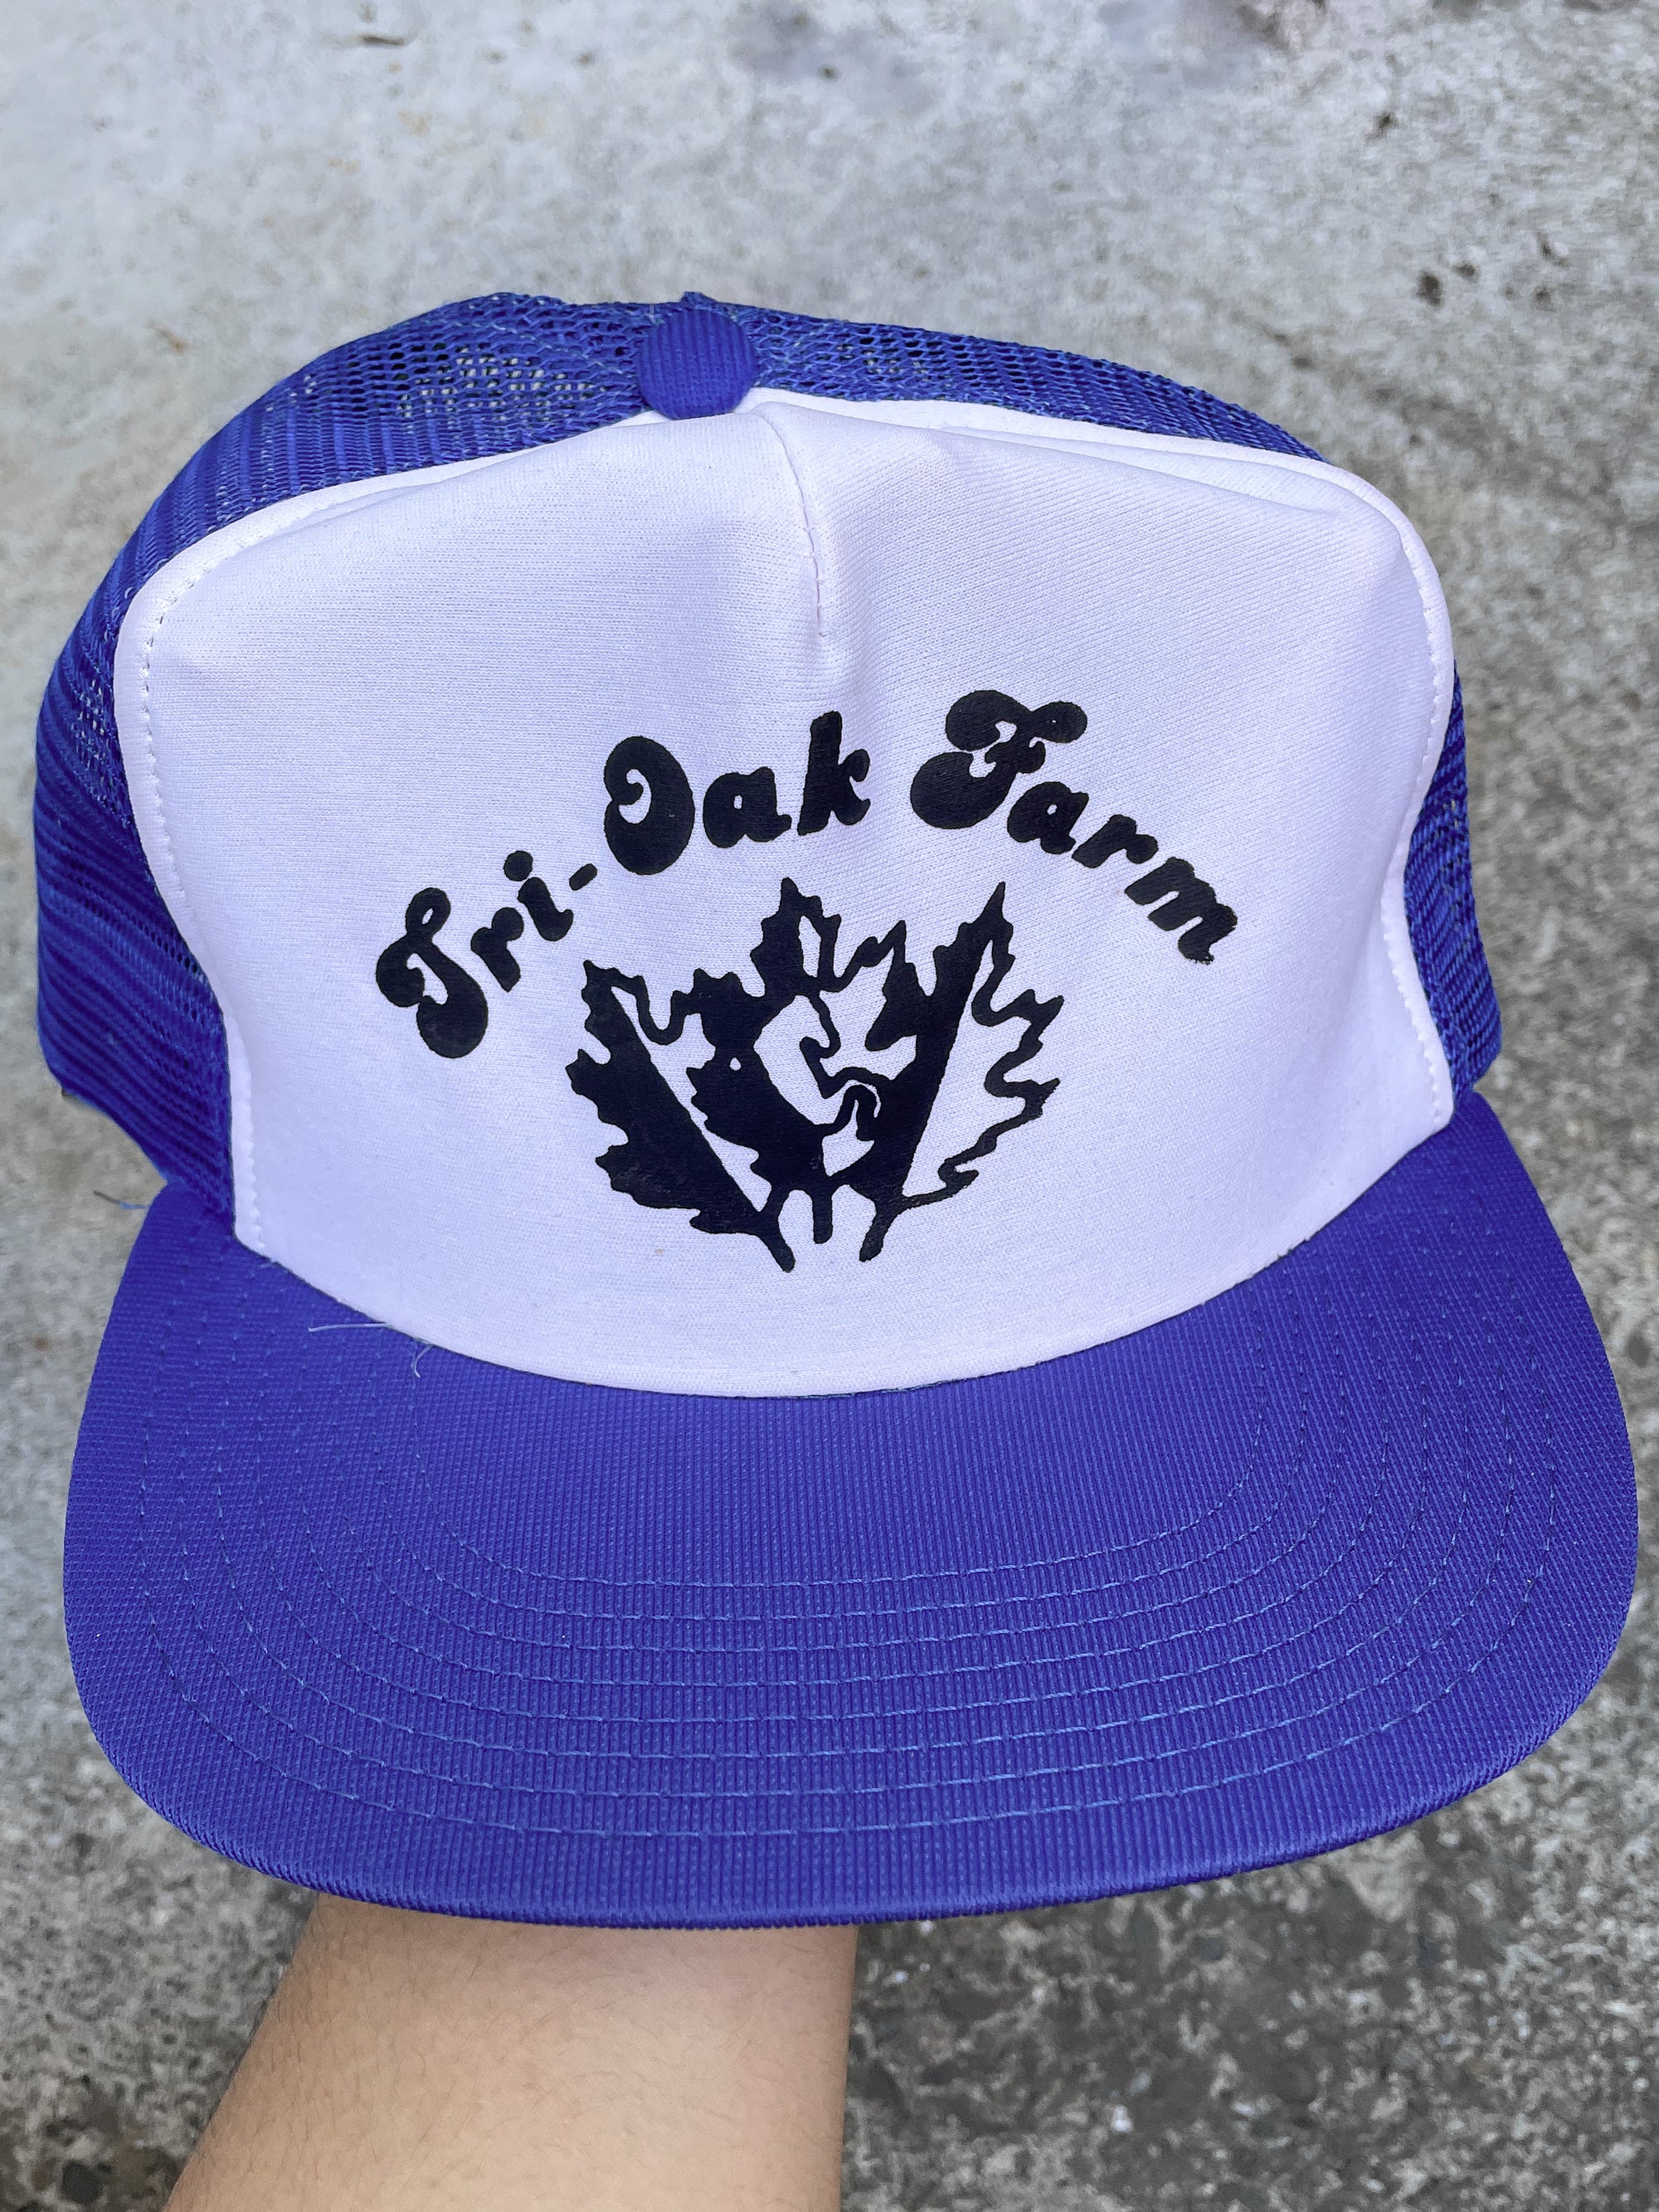 1980s “Tri-Oak Farm” Trucker Hat